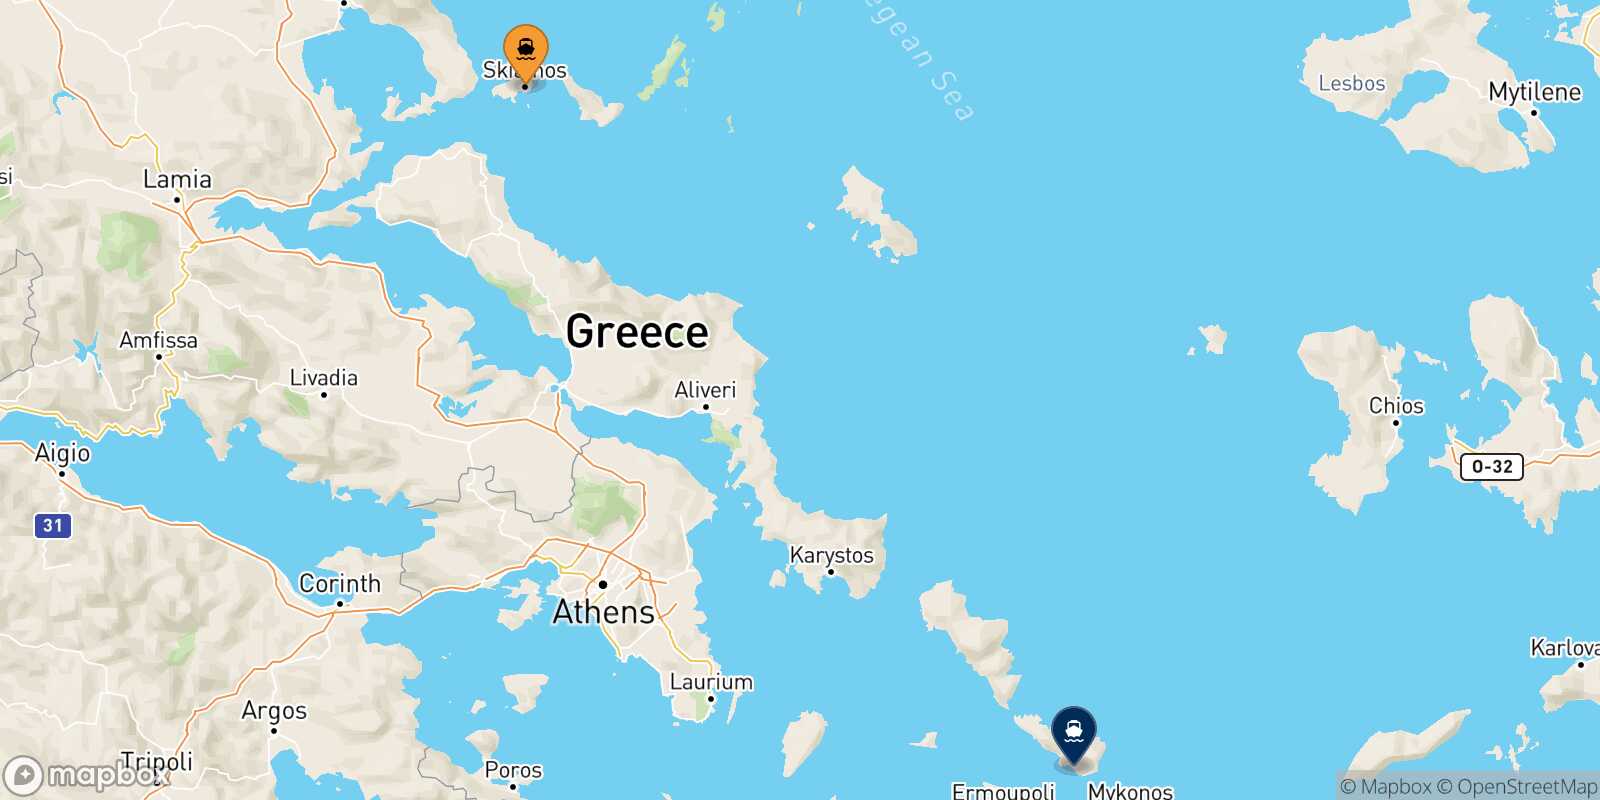 Skiathos Tinos route map